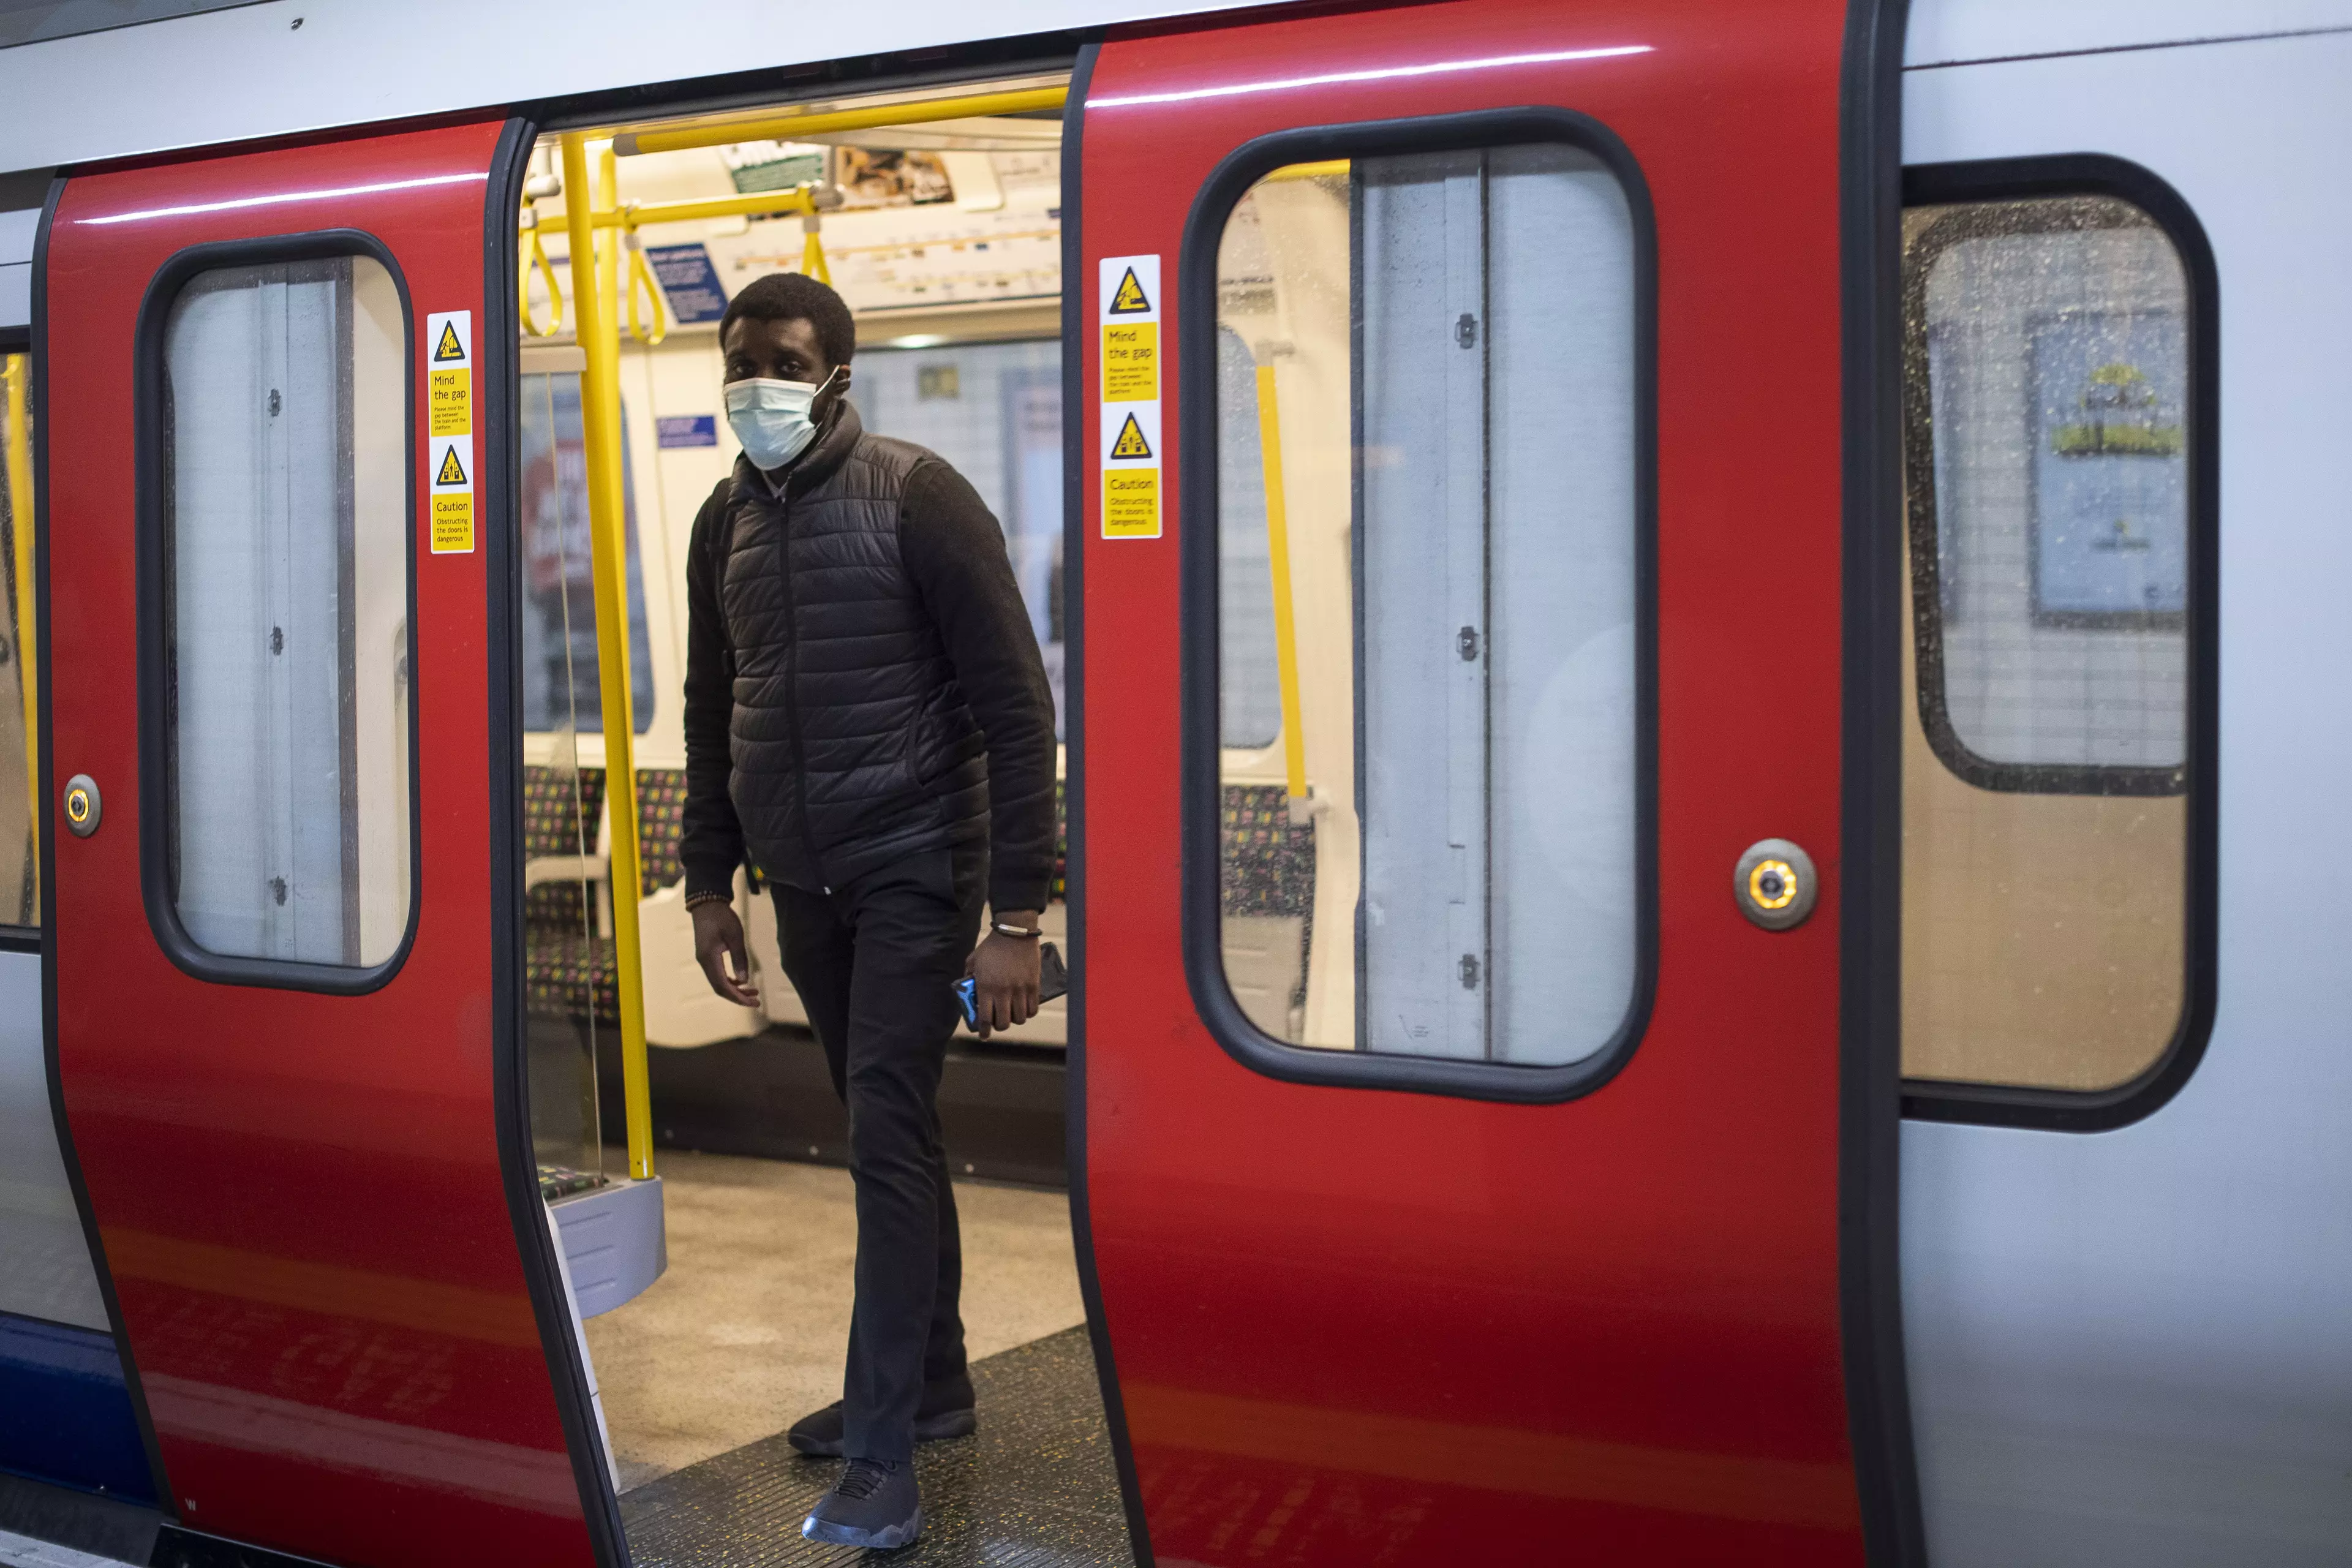 Face masks are already mandatory on public transport.